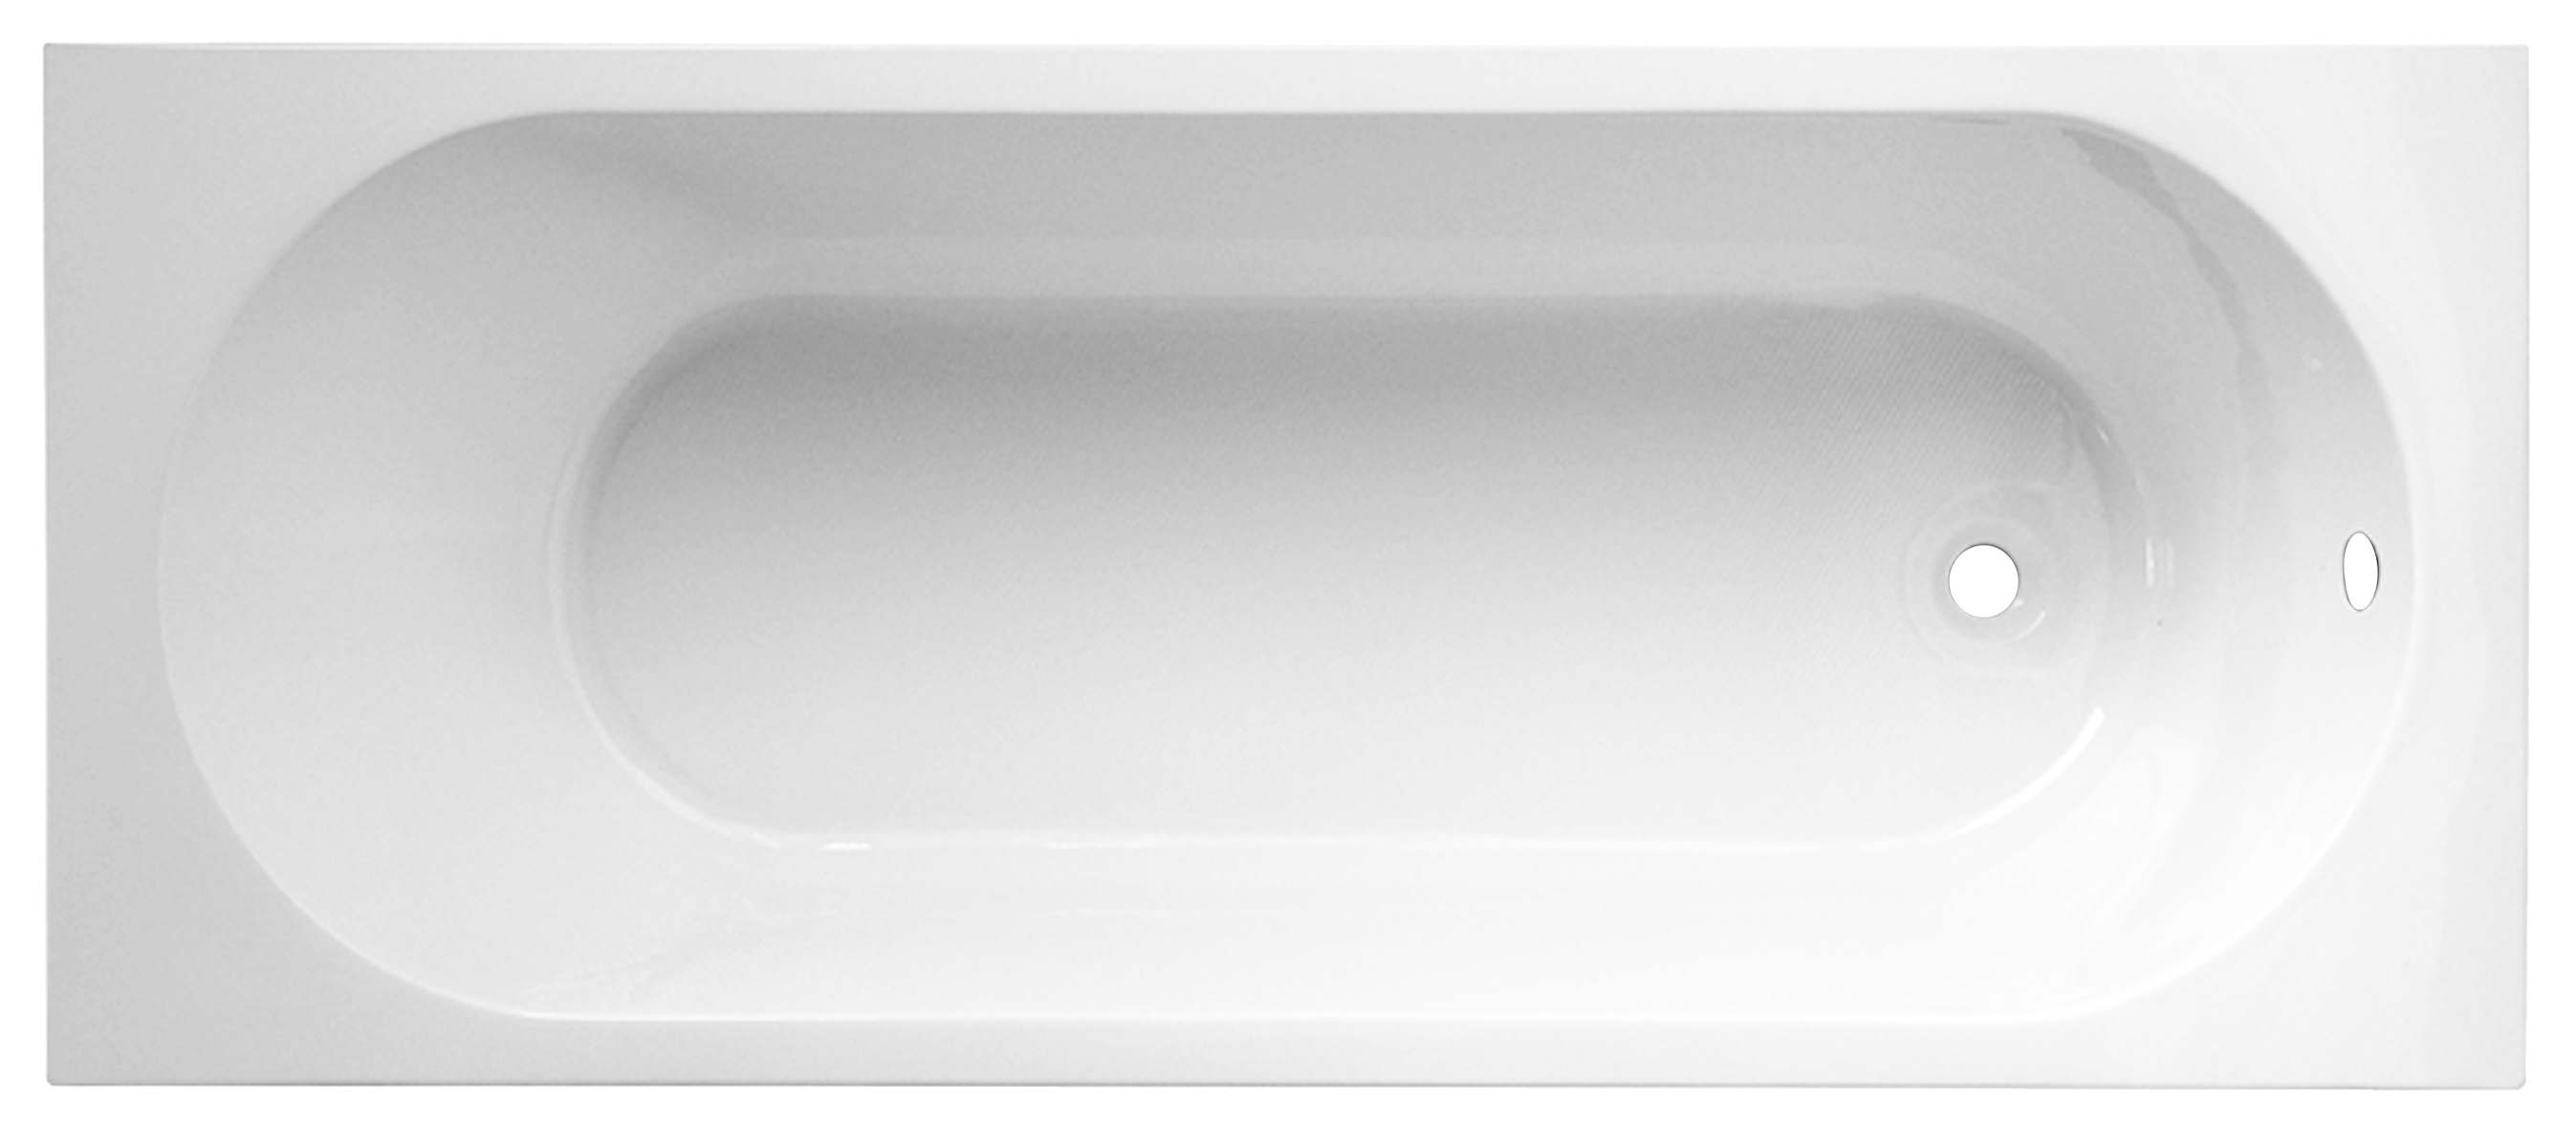 Bañera rectangular sanycces nerea 180x80x40 cm